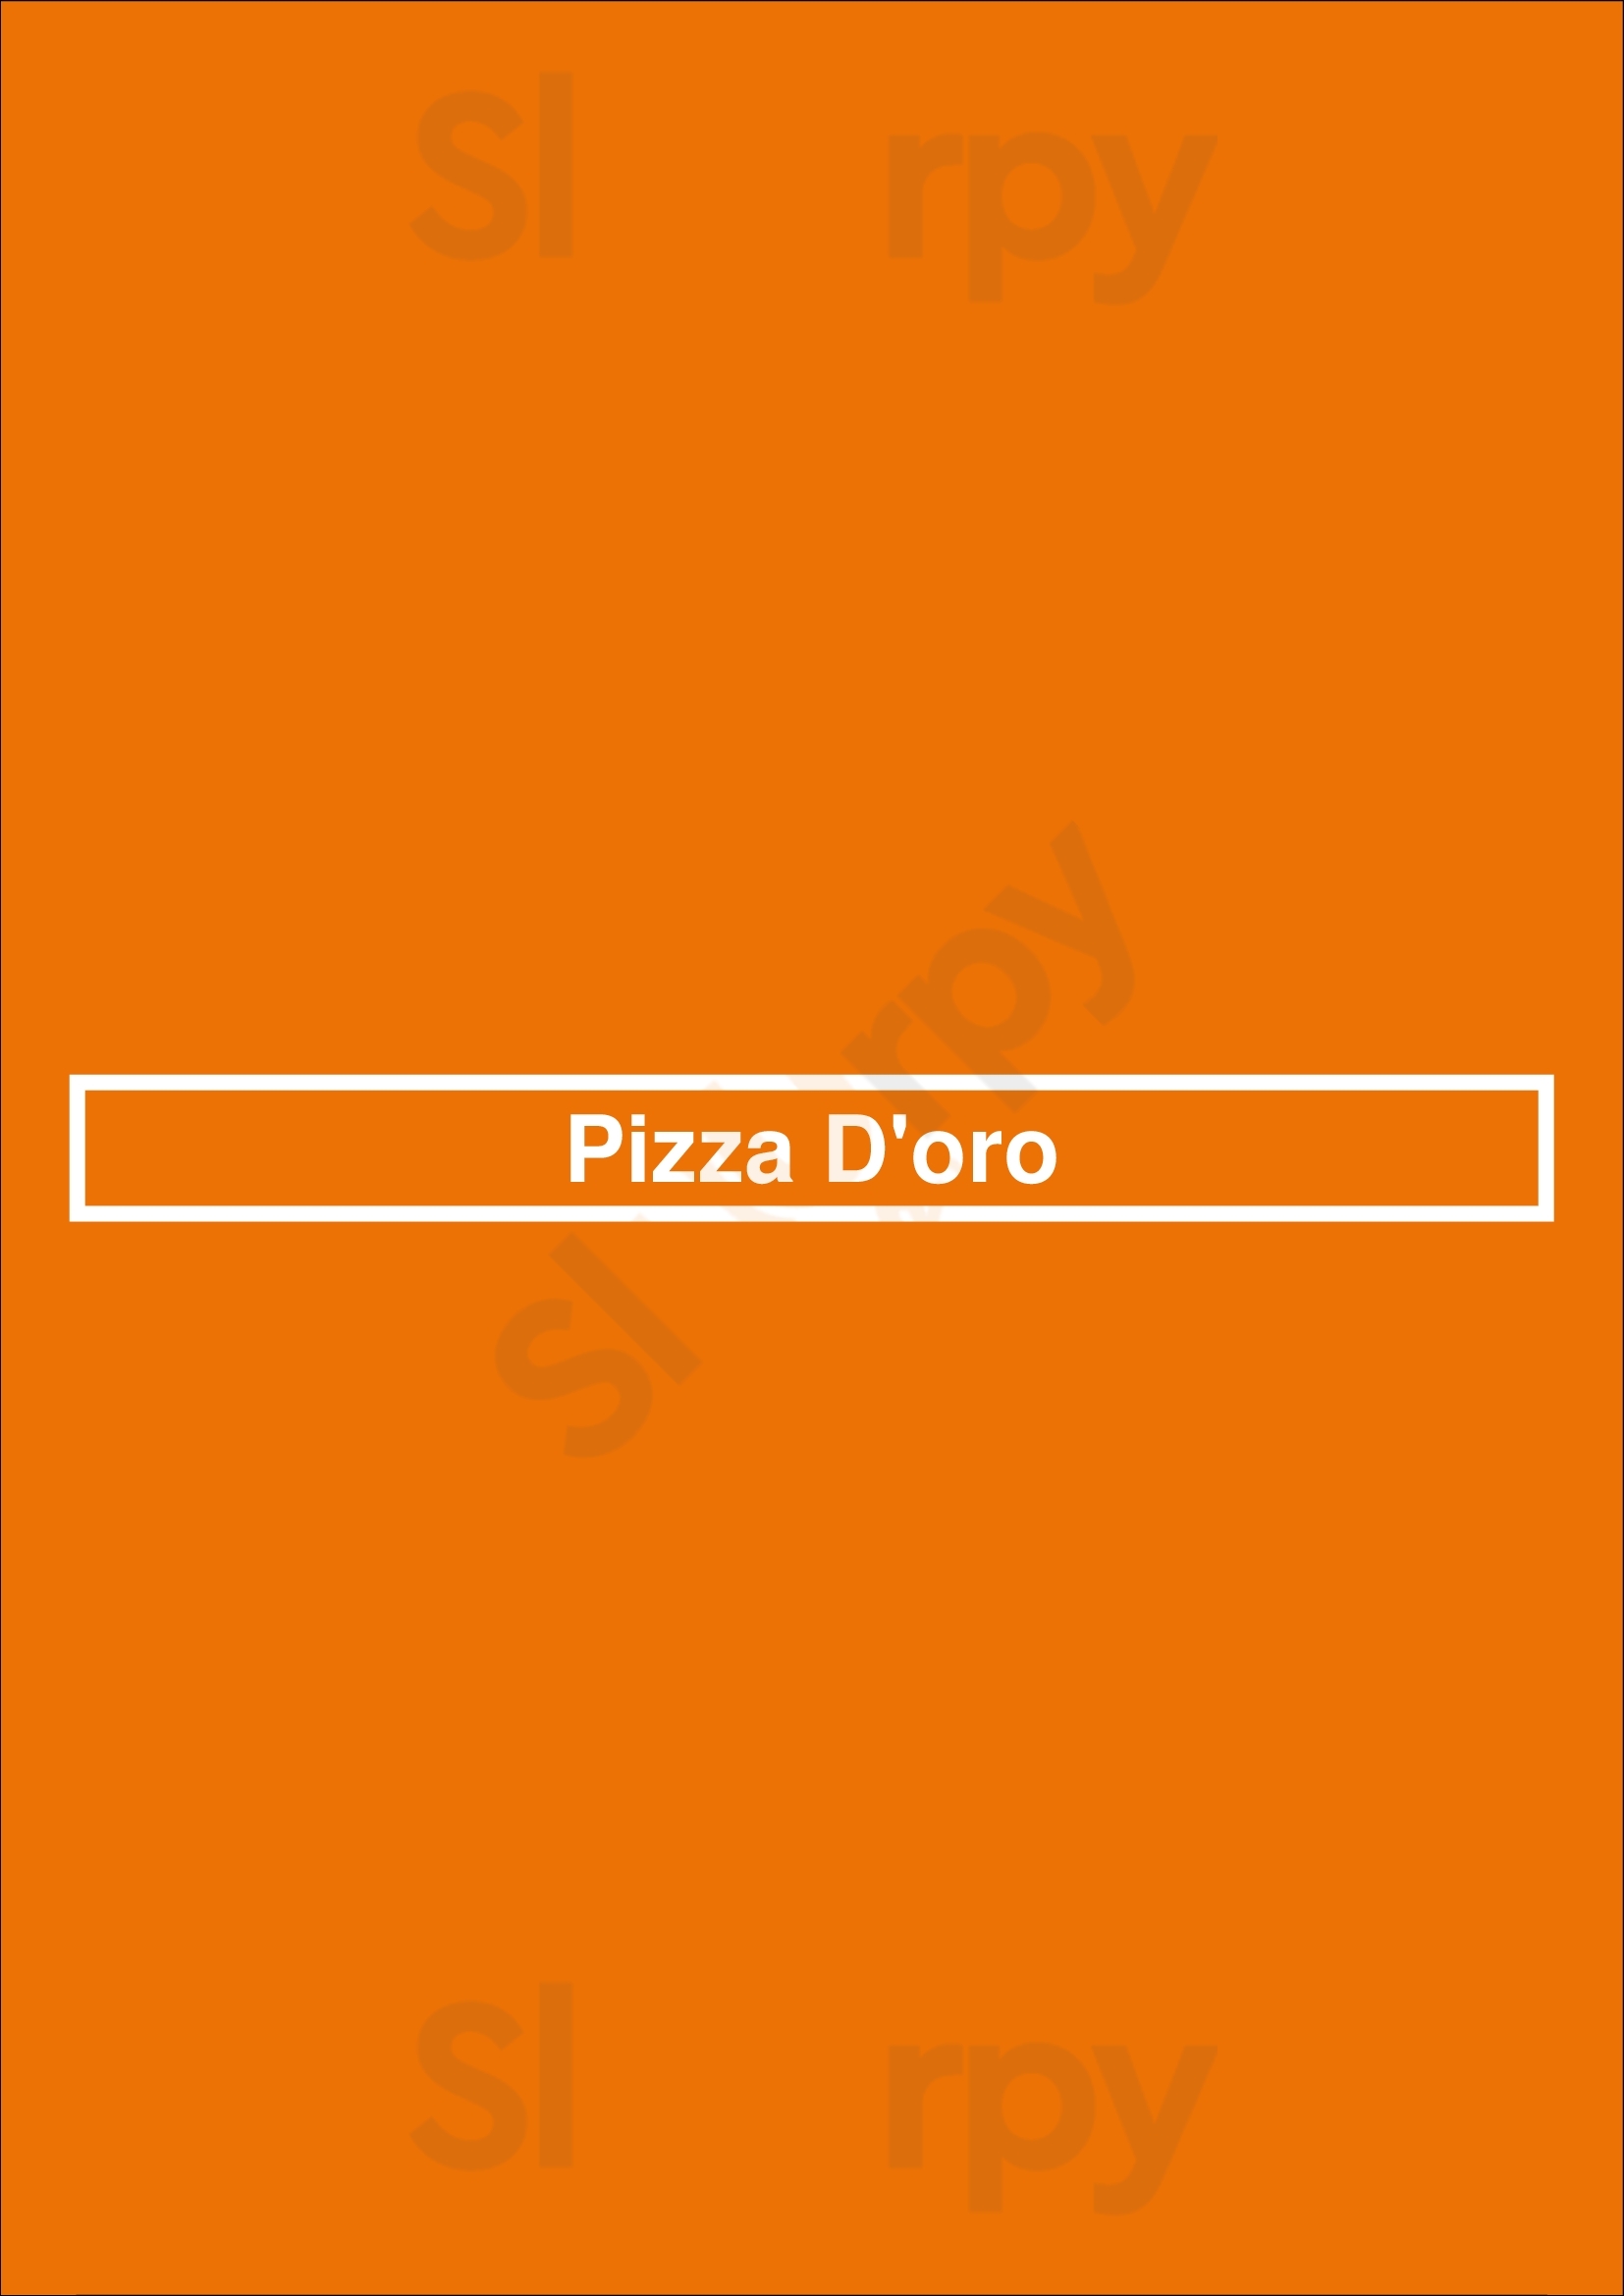 Pizza D'oro Huntington Beach Menu - 1